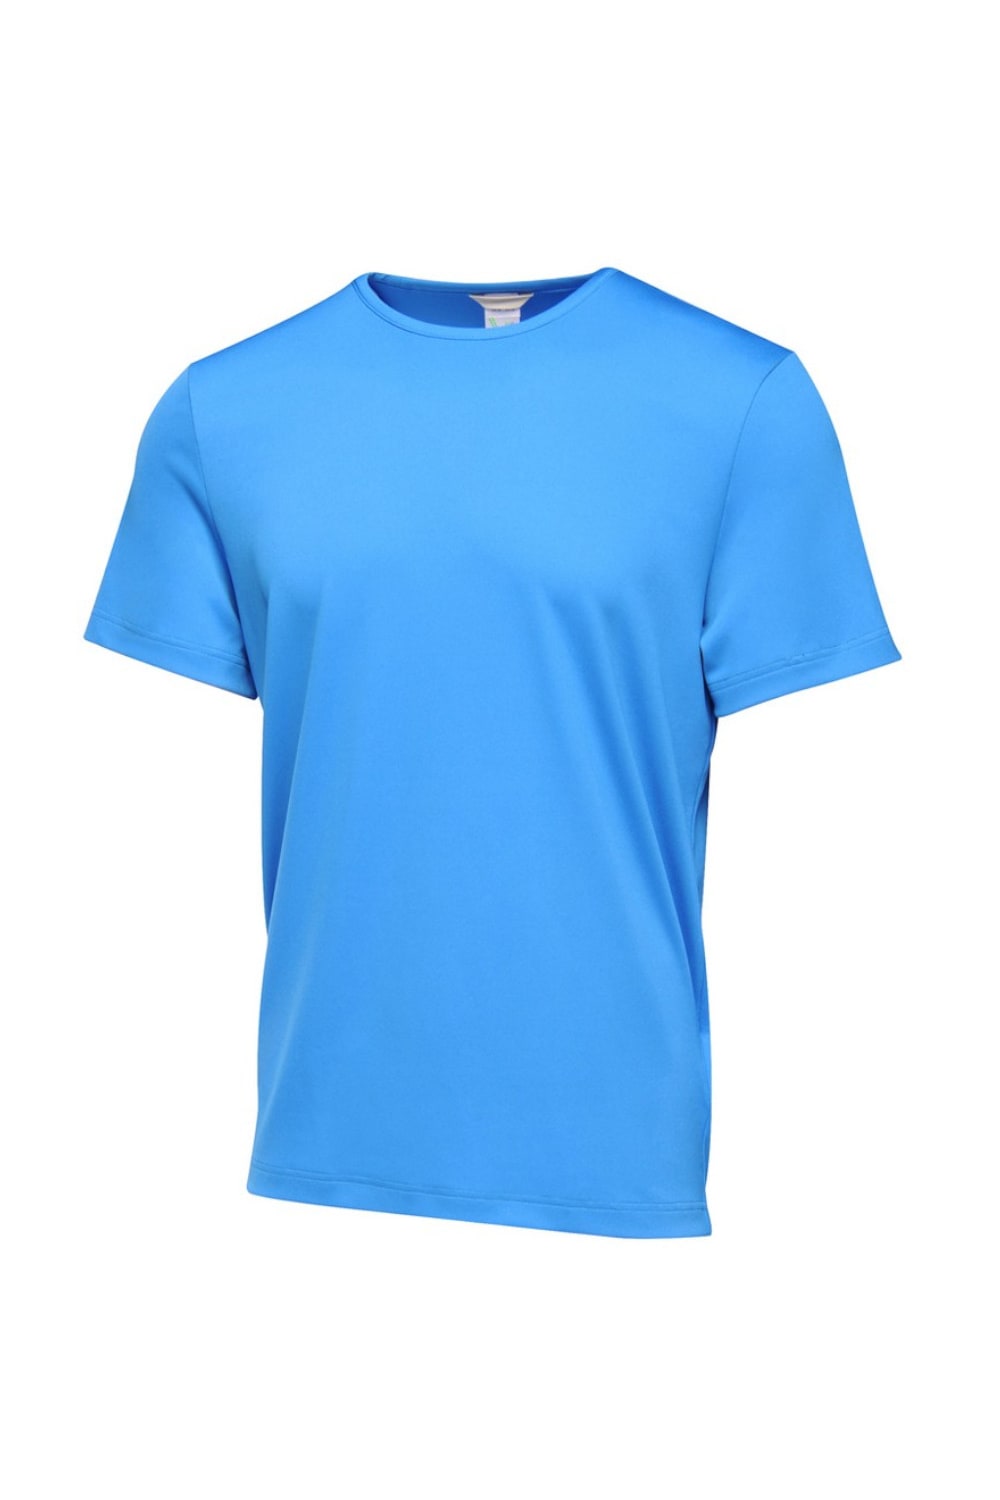 Regatta Activewear Mens Torino T-Shirt (Oxford Blue)